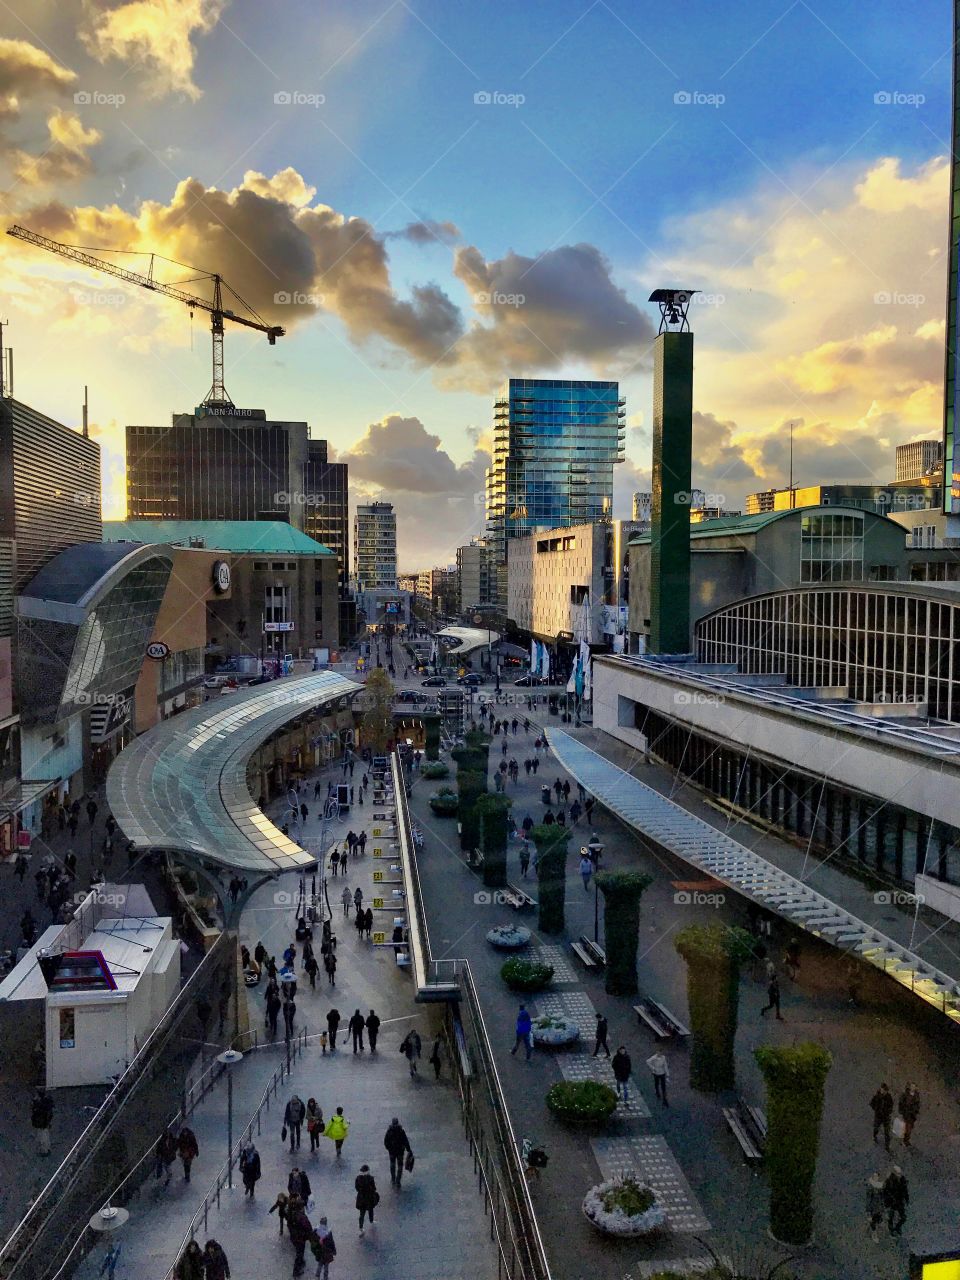 Rotterdam shopping center, the Netherlands 